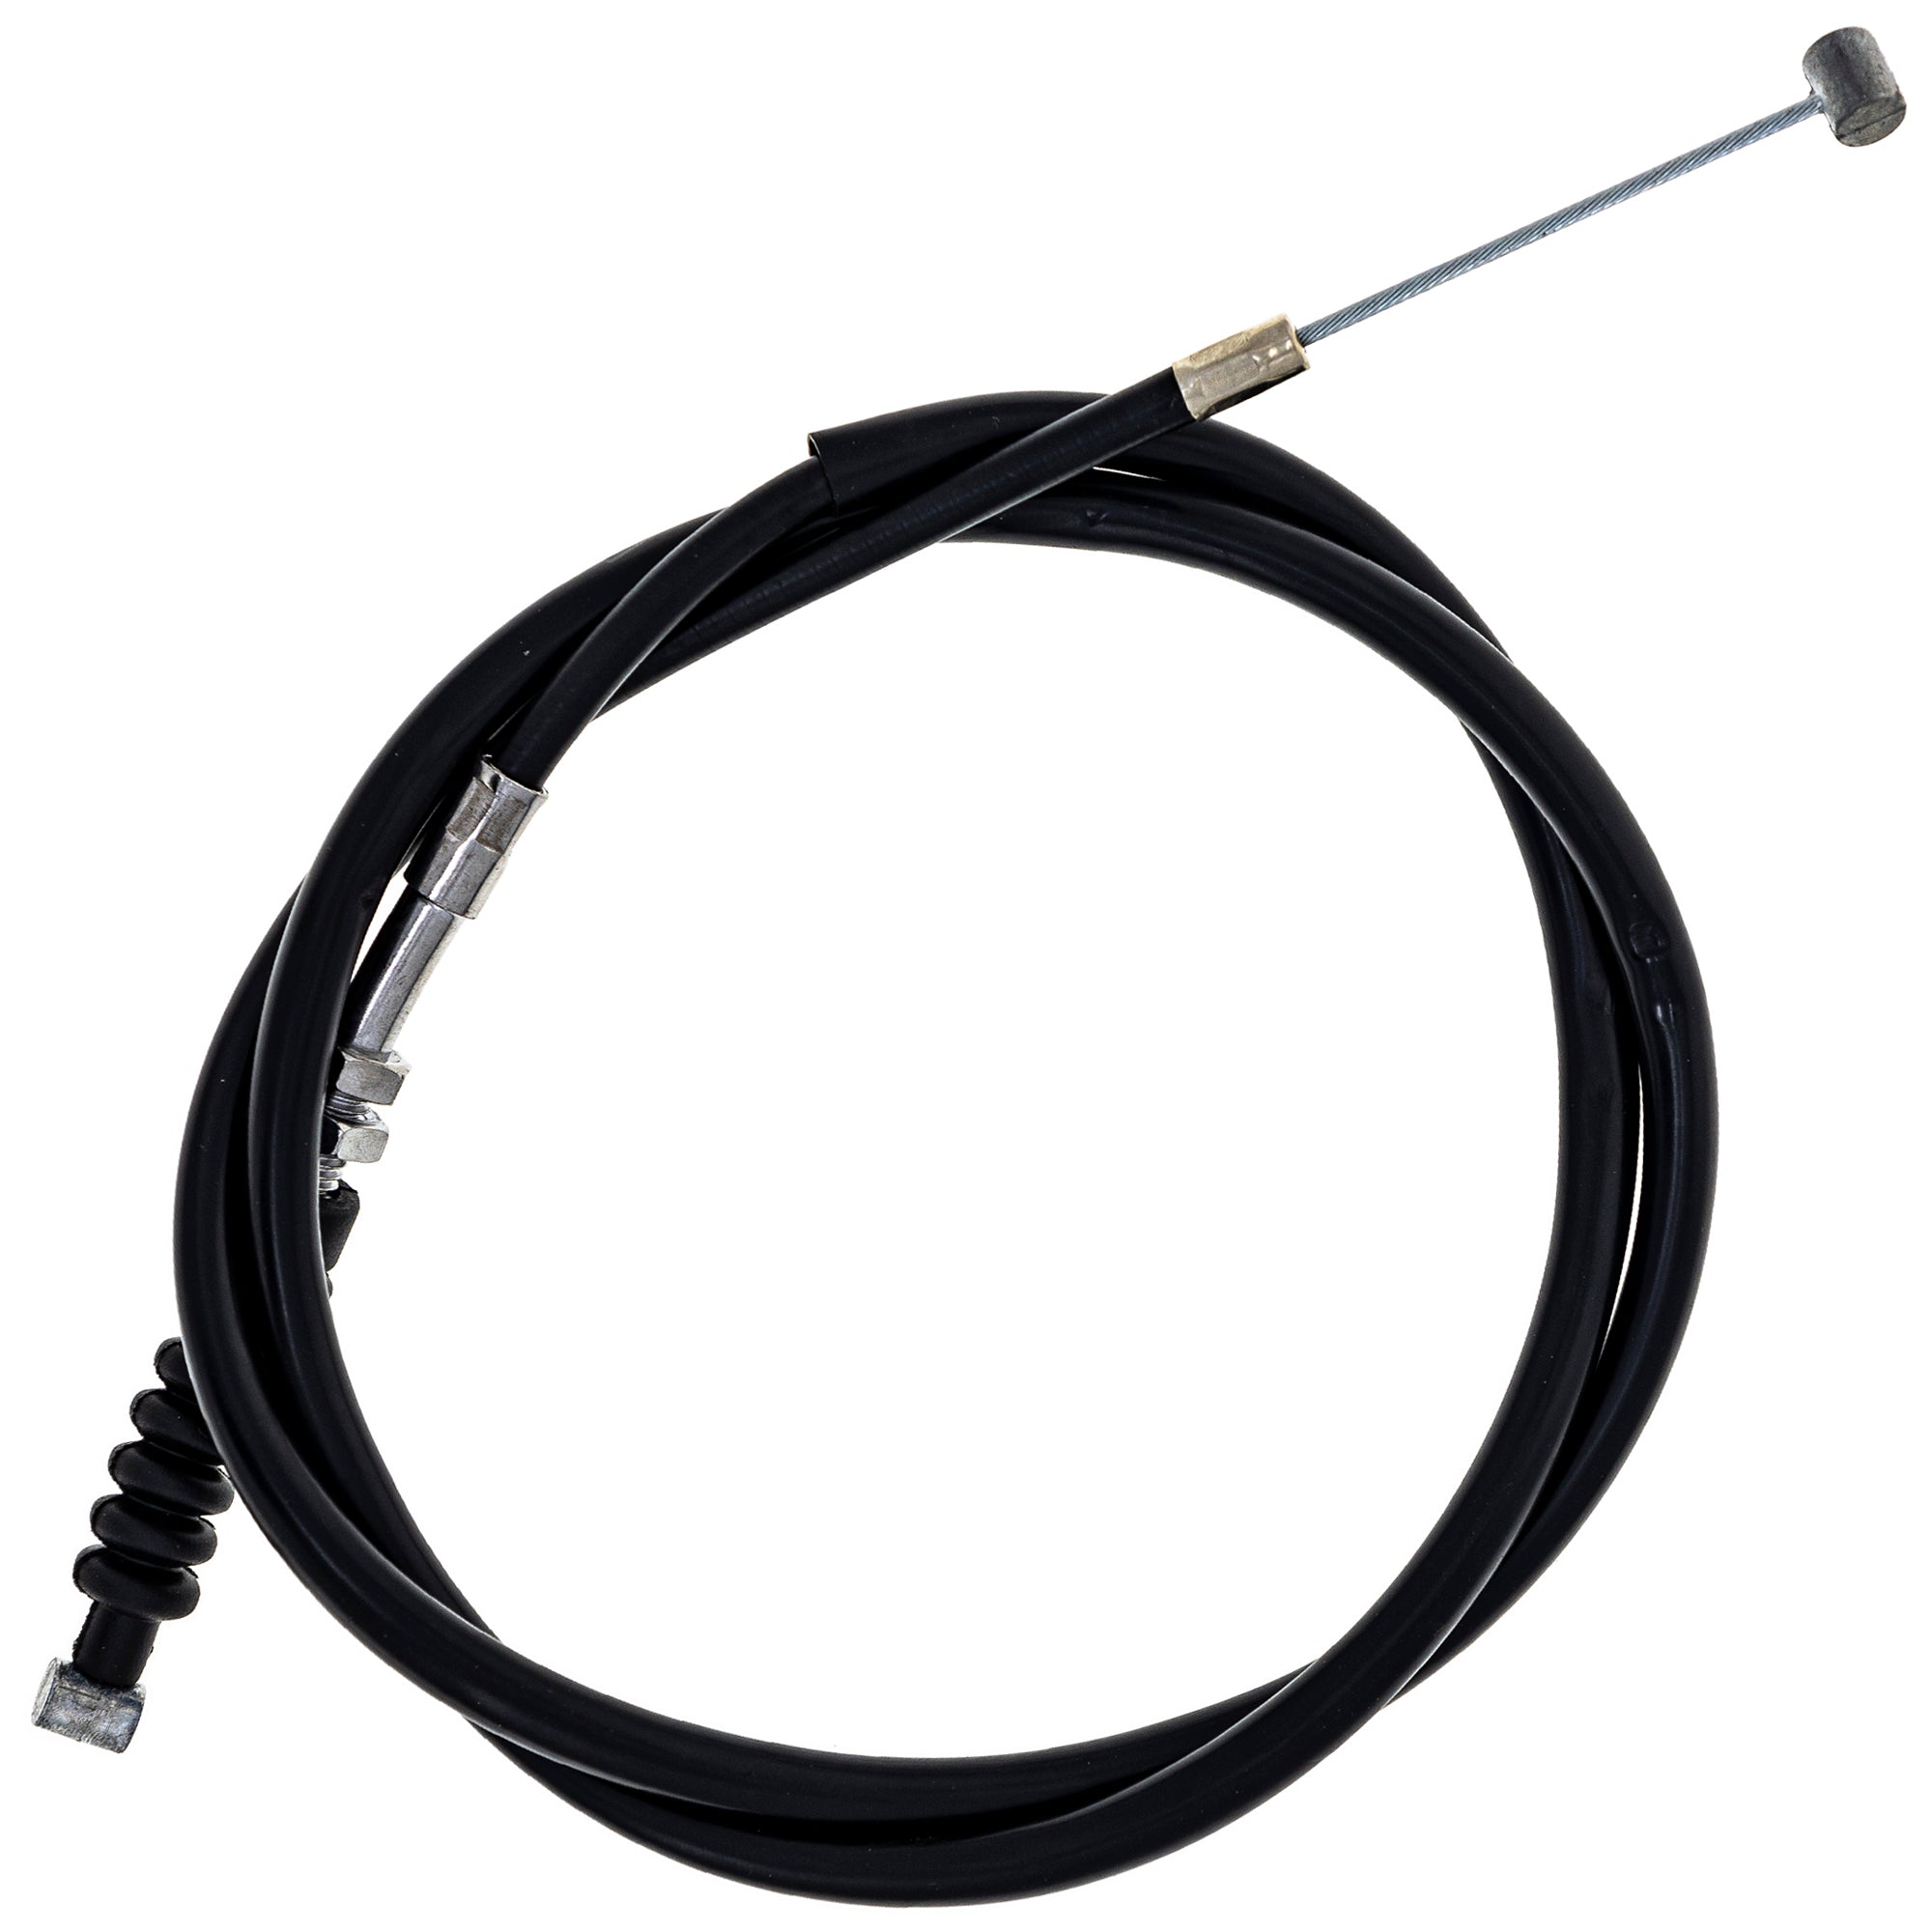 Clutch Cable for zOTHER Quadsport DR350SE DR250SE NICHE 519-CCB2956L